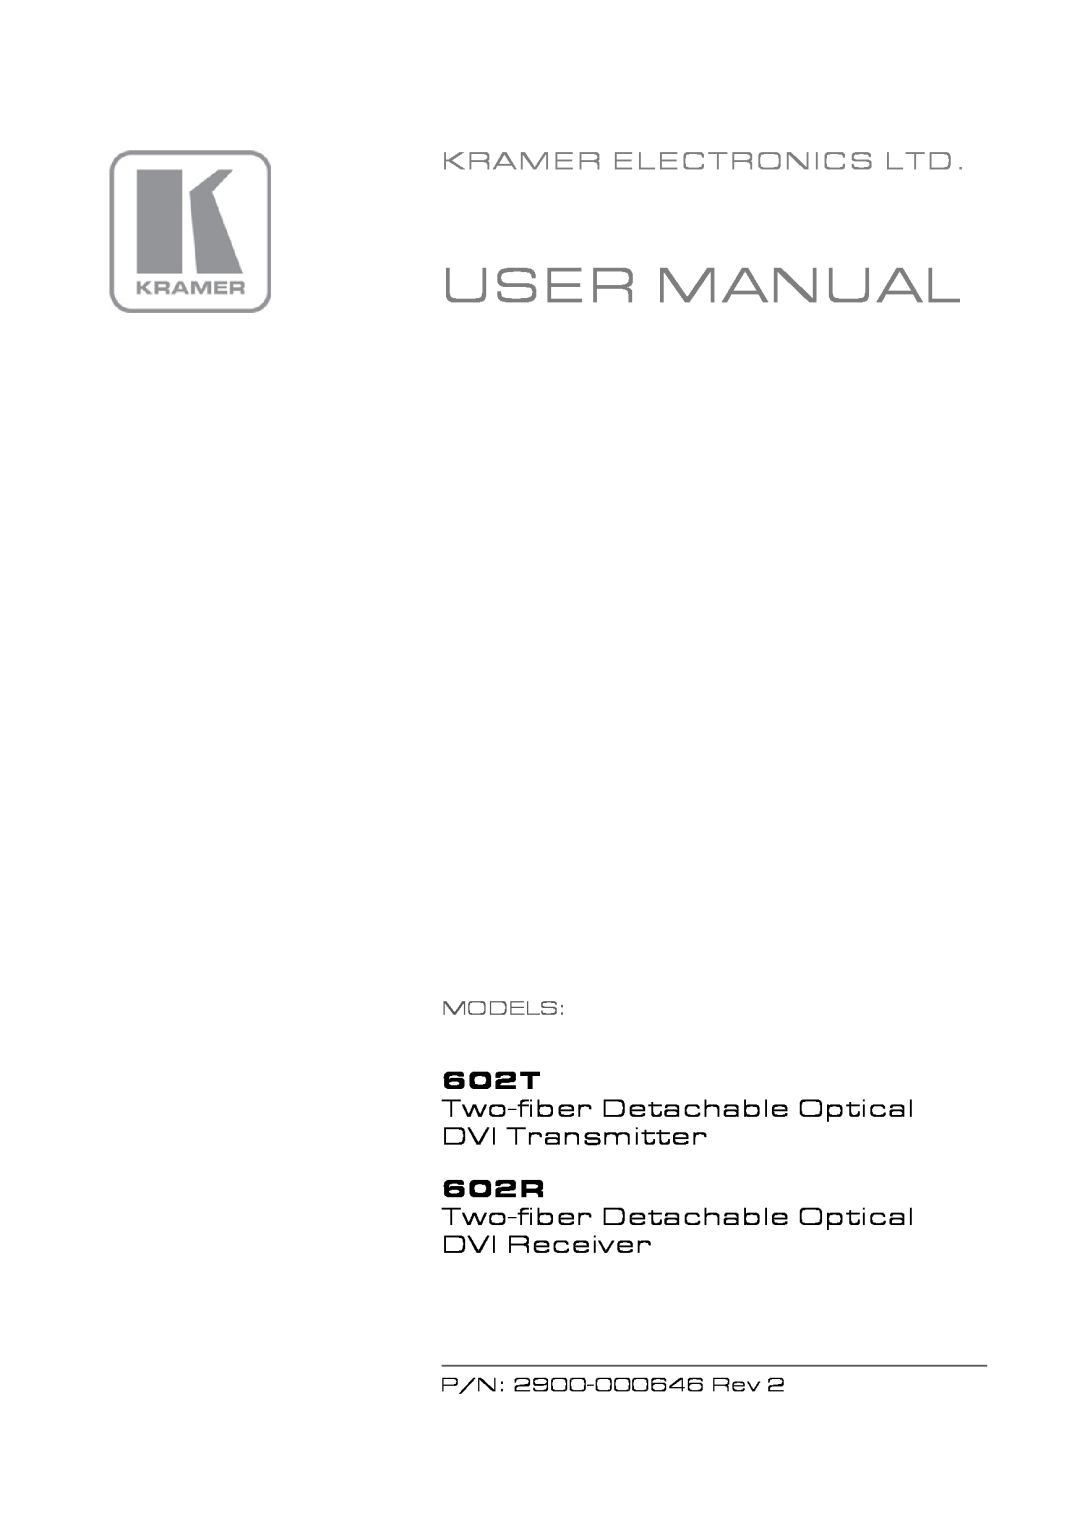 Kramer Electronics 602T user manual Two-fiberDetachable Optical DVI Transmitter, 602R, Models 